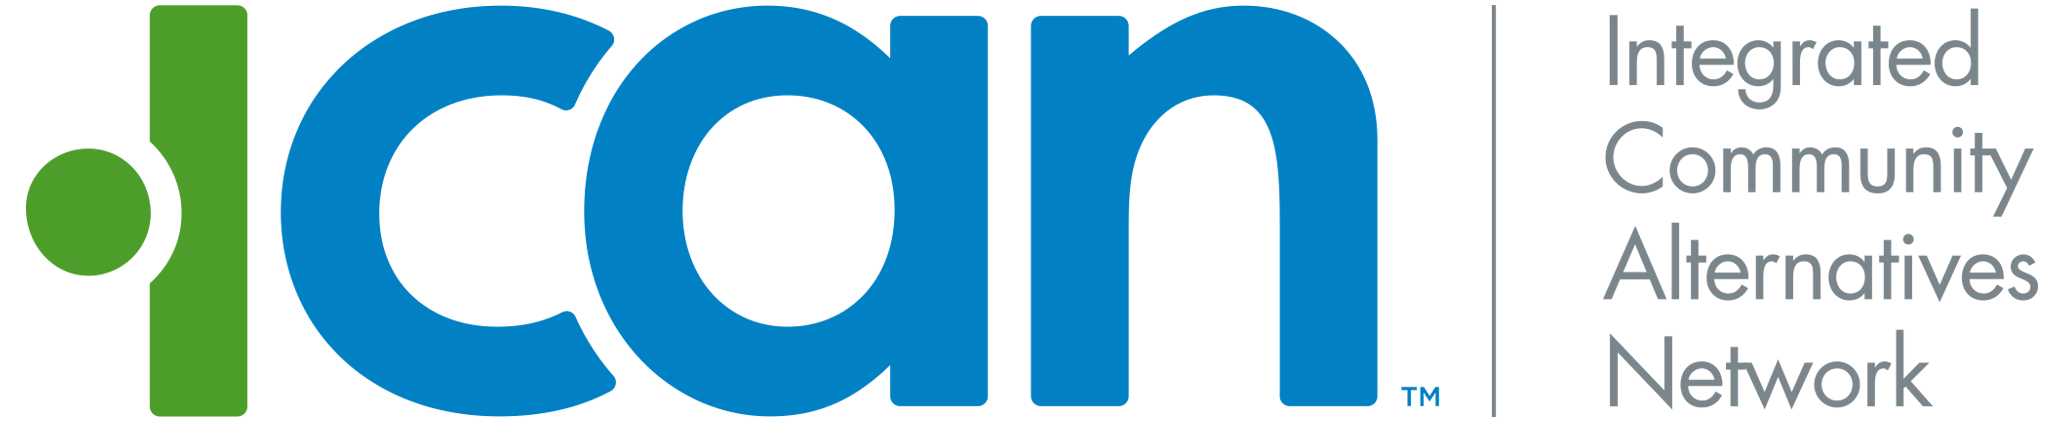 ICAN logo.png